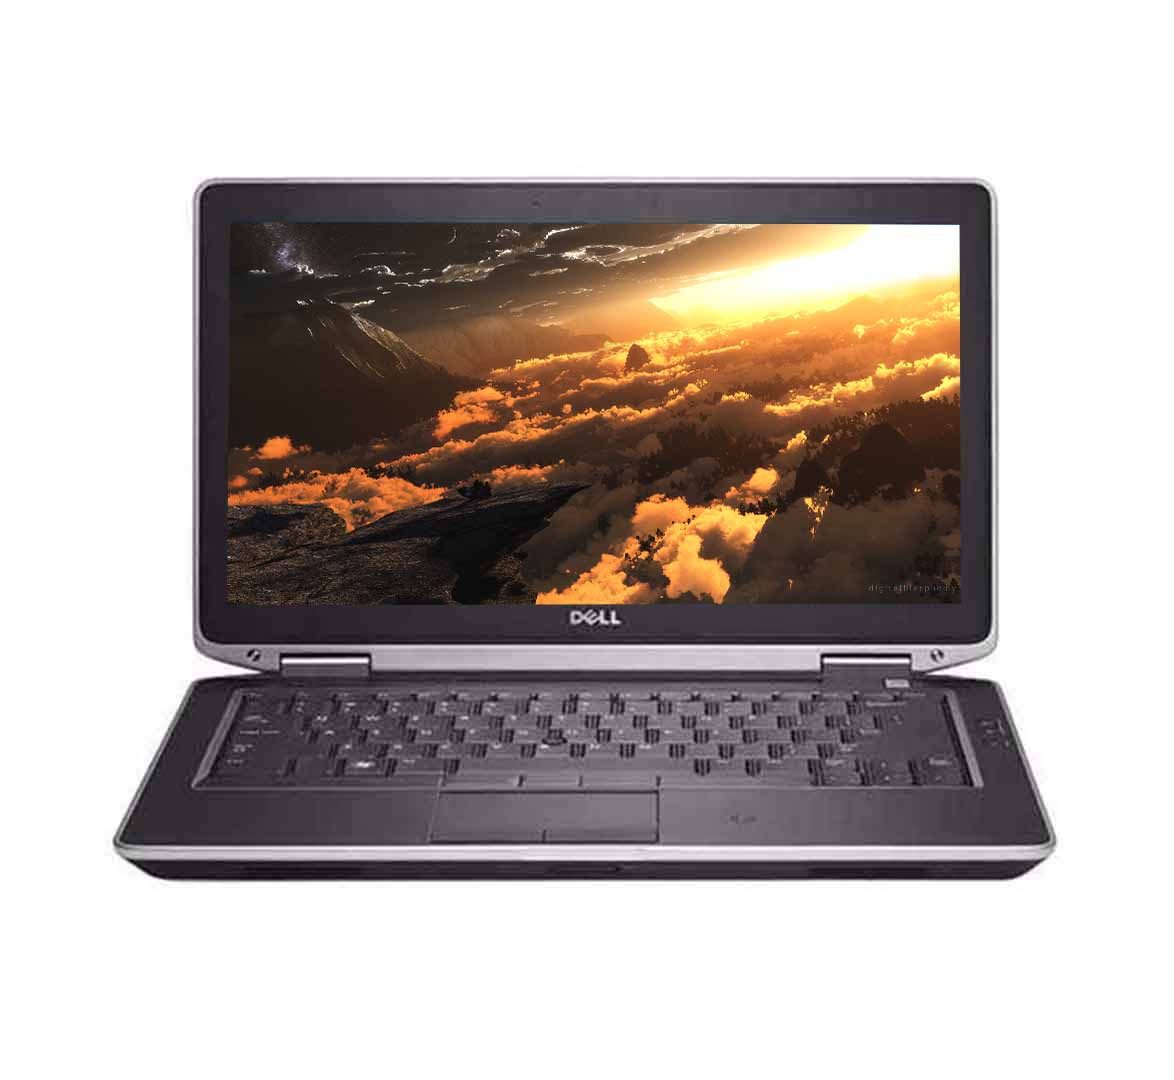 Dell Latitude E6530 Business Laptop, Intel Core i5-3rd Gen CPU, 8GB Ram, 500GB HDD, 15.6 Inch Display, Windows 10 Pro Refurbished Laptop